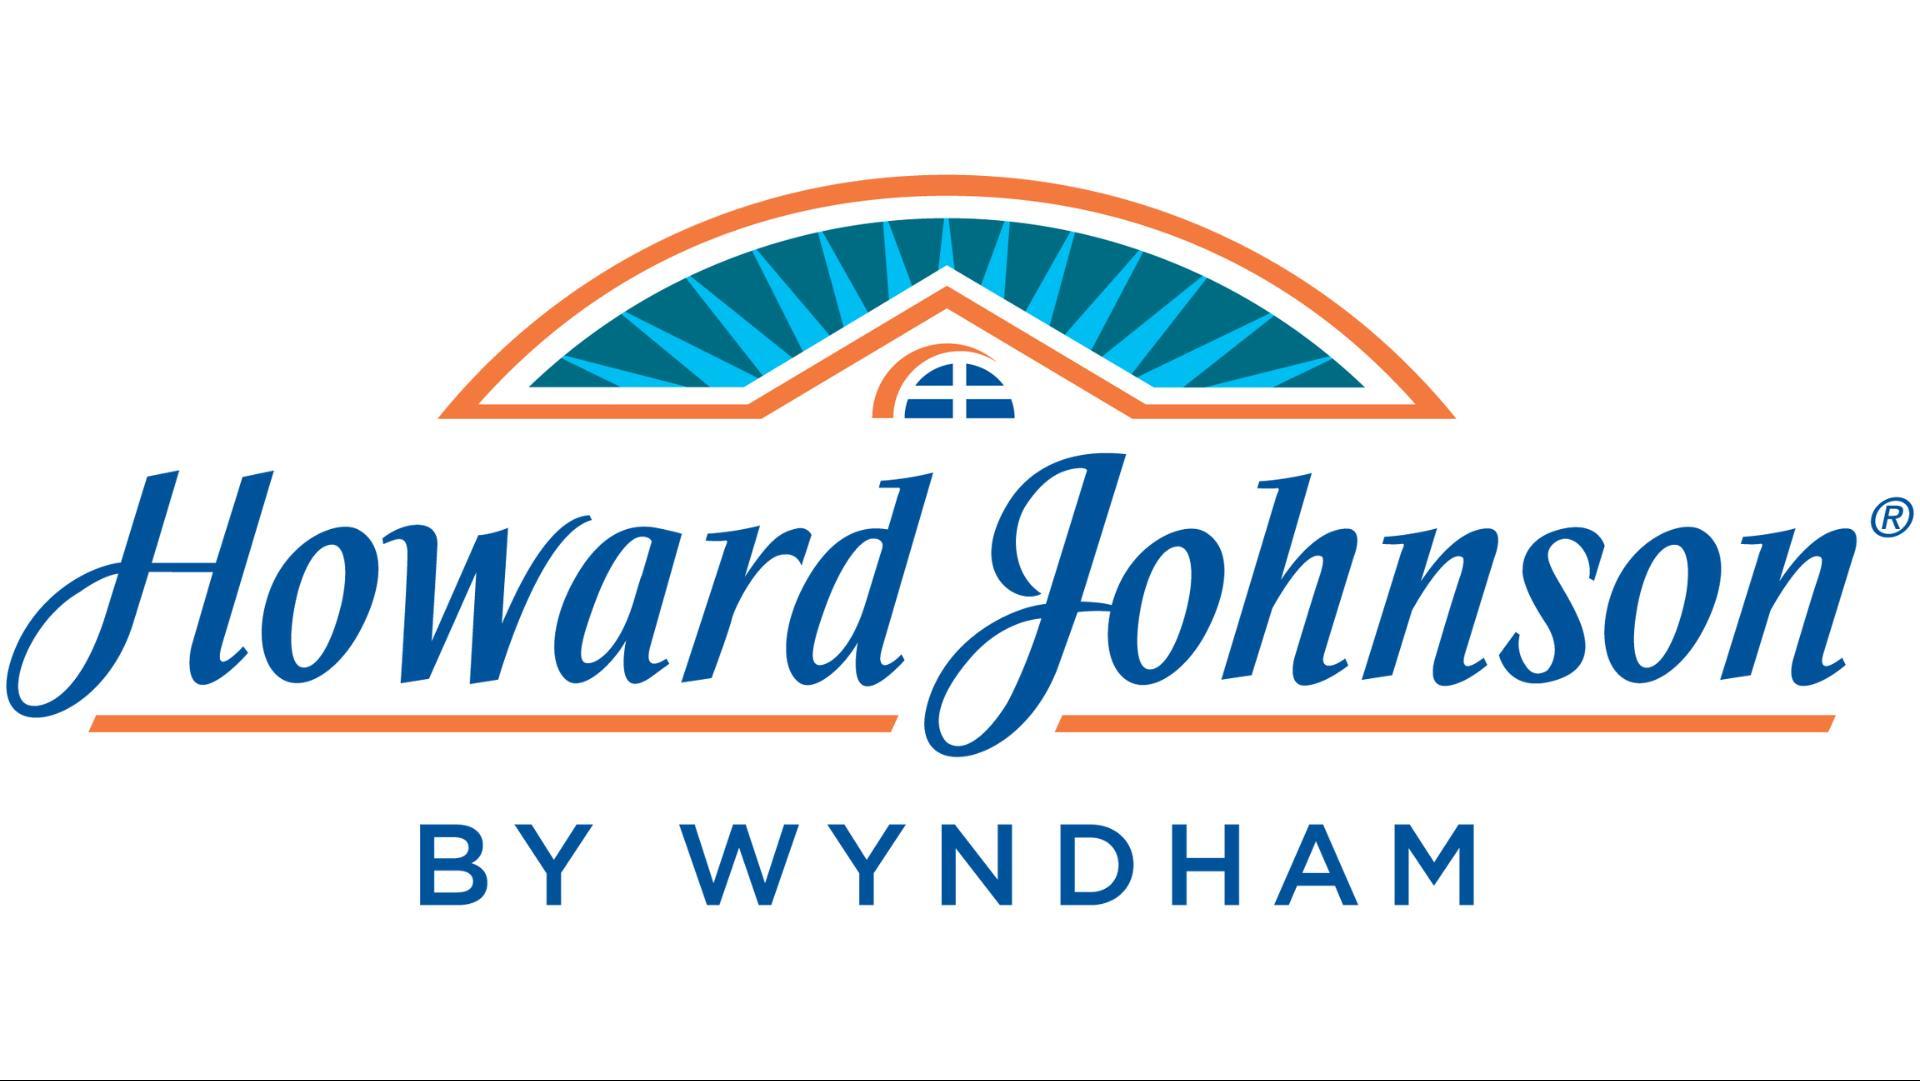 Developer Inn Highway, A Howard Johnson by Wyndham in Kissimmee, FL